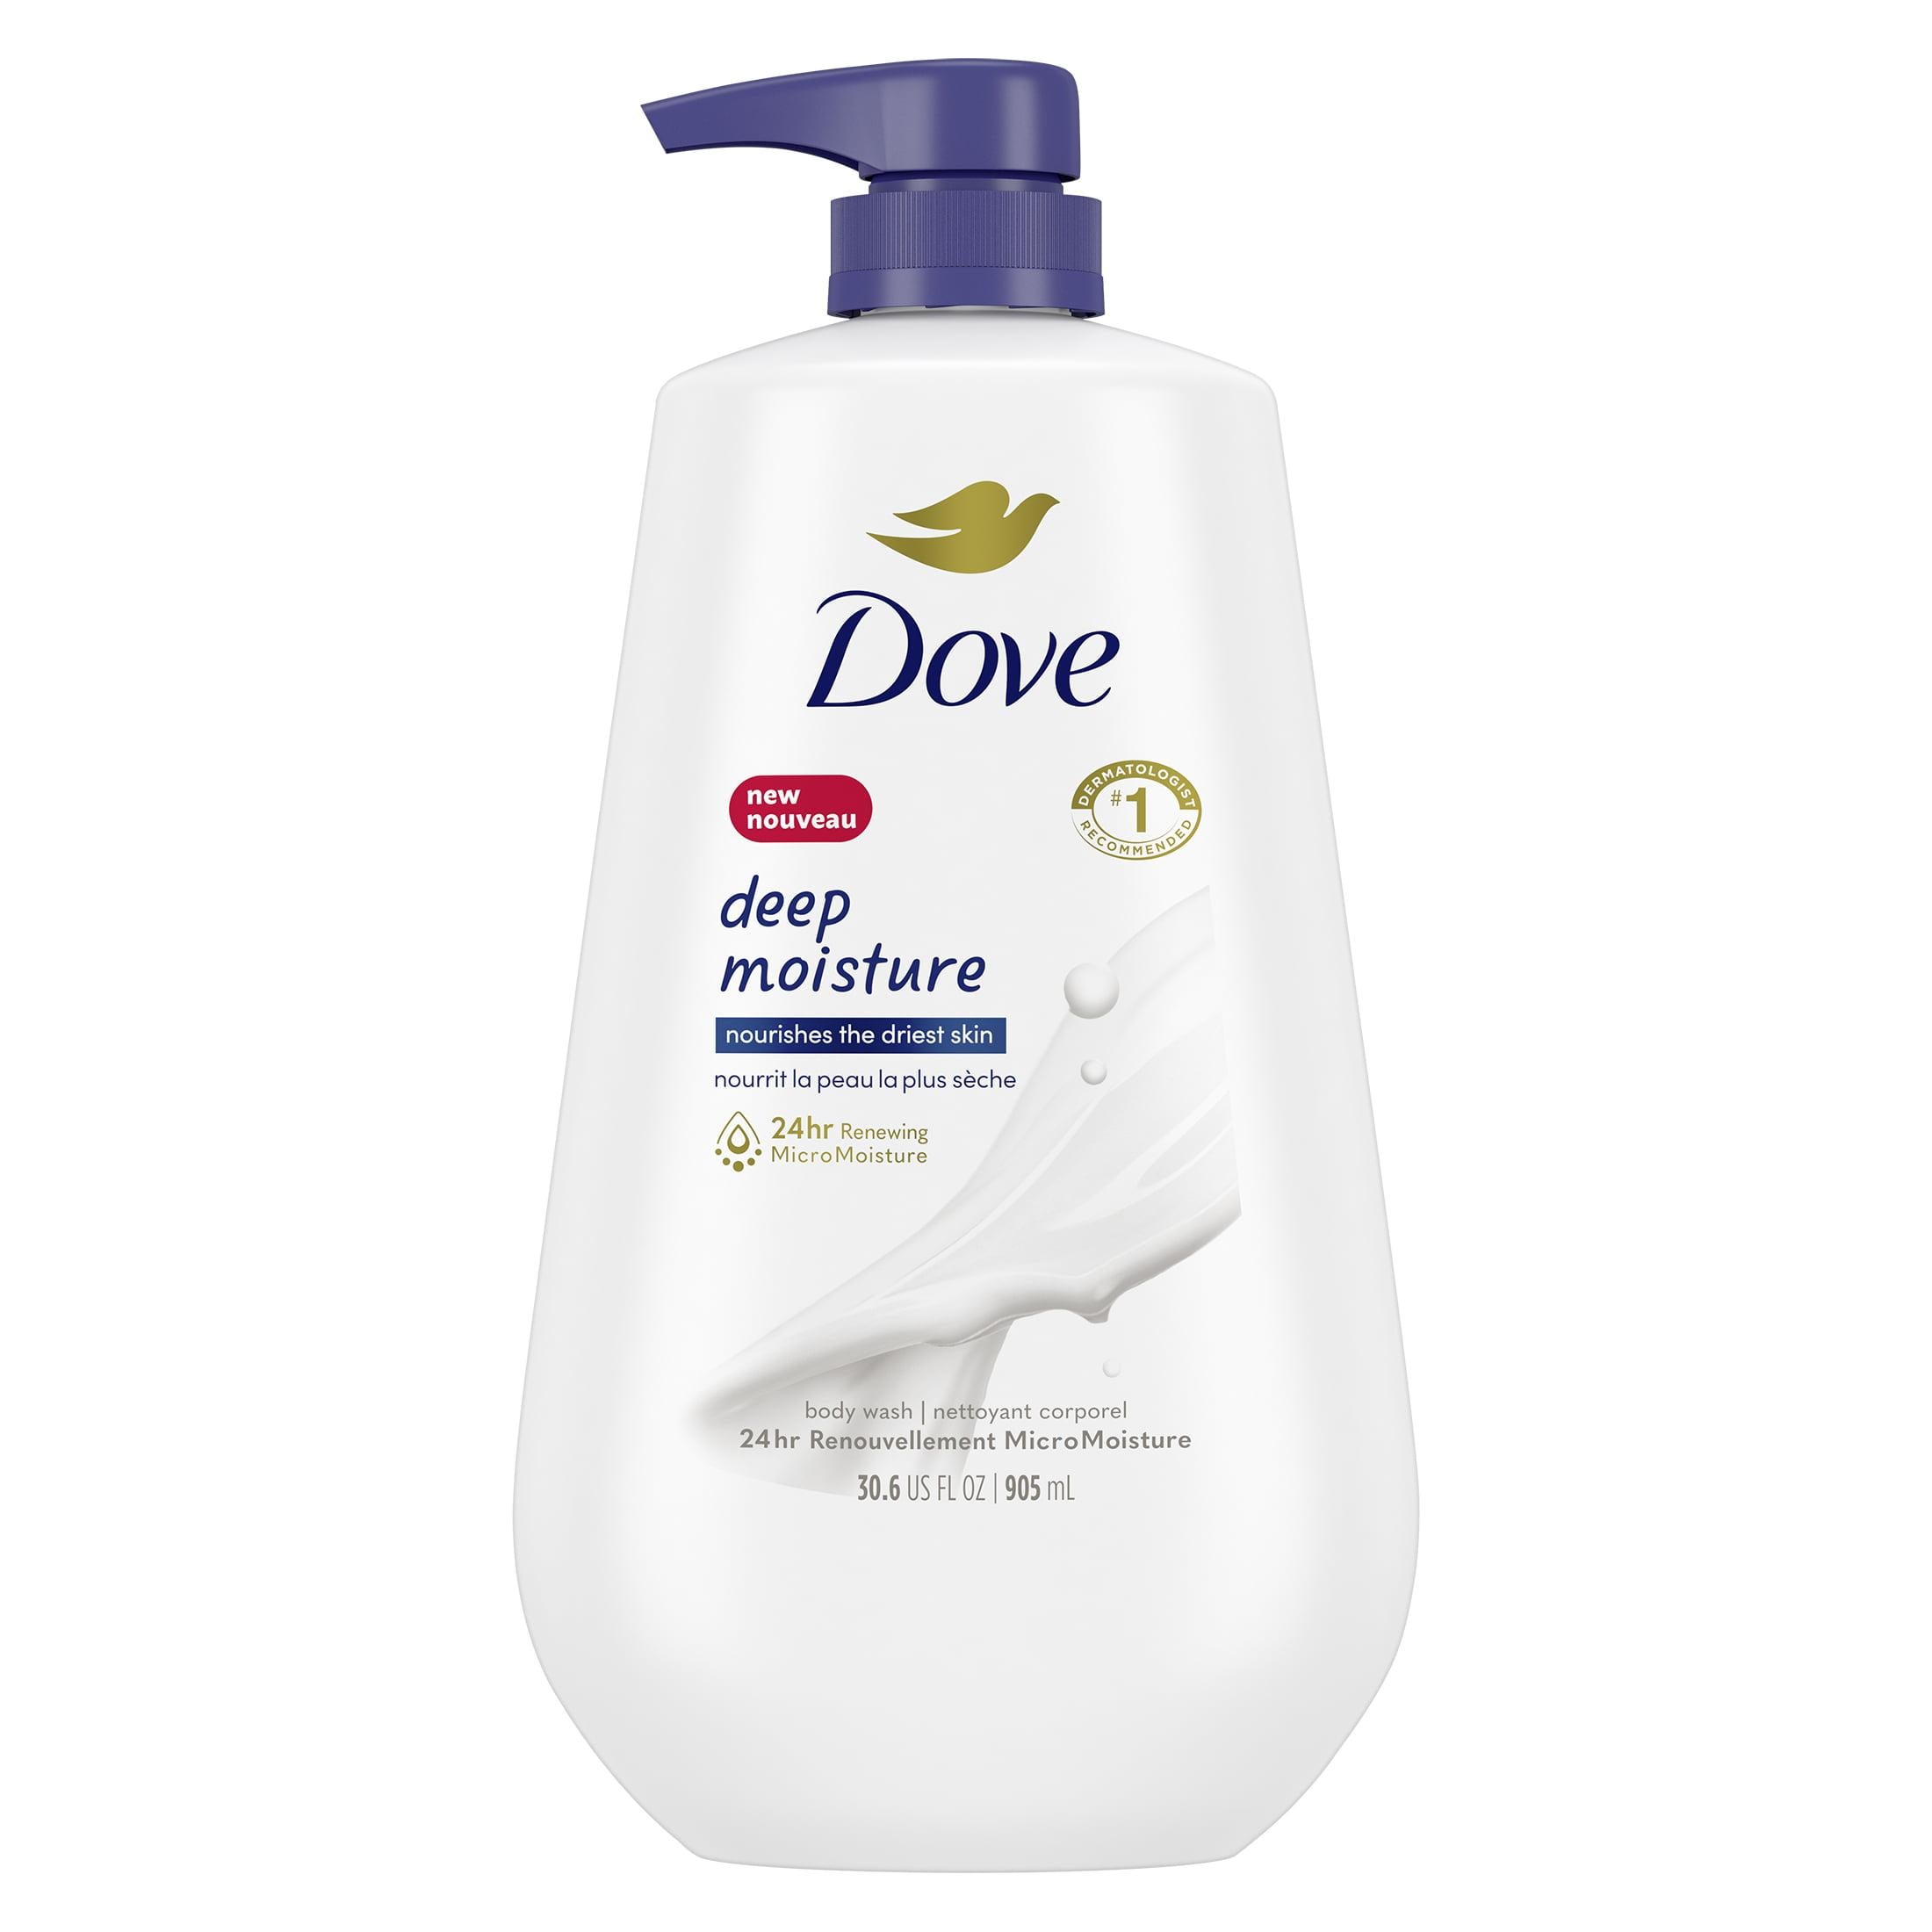 Dove Deep Moisture Nourishing Long Lasting Body Wash, 30.6 fl oz | MTTS421